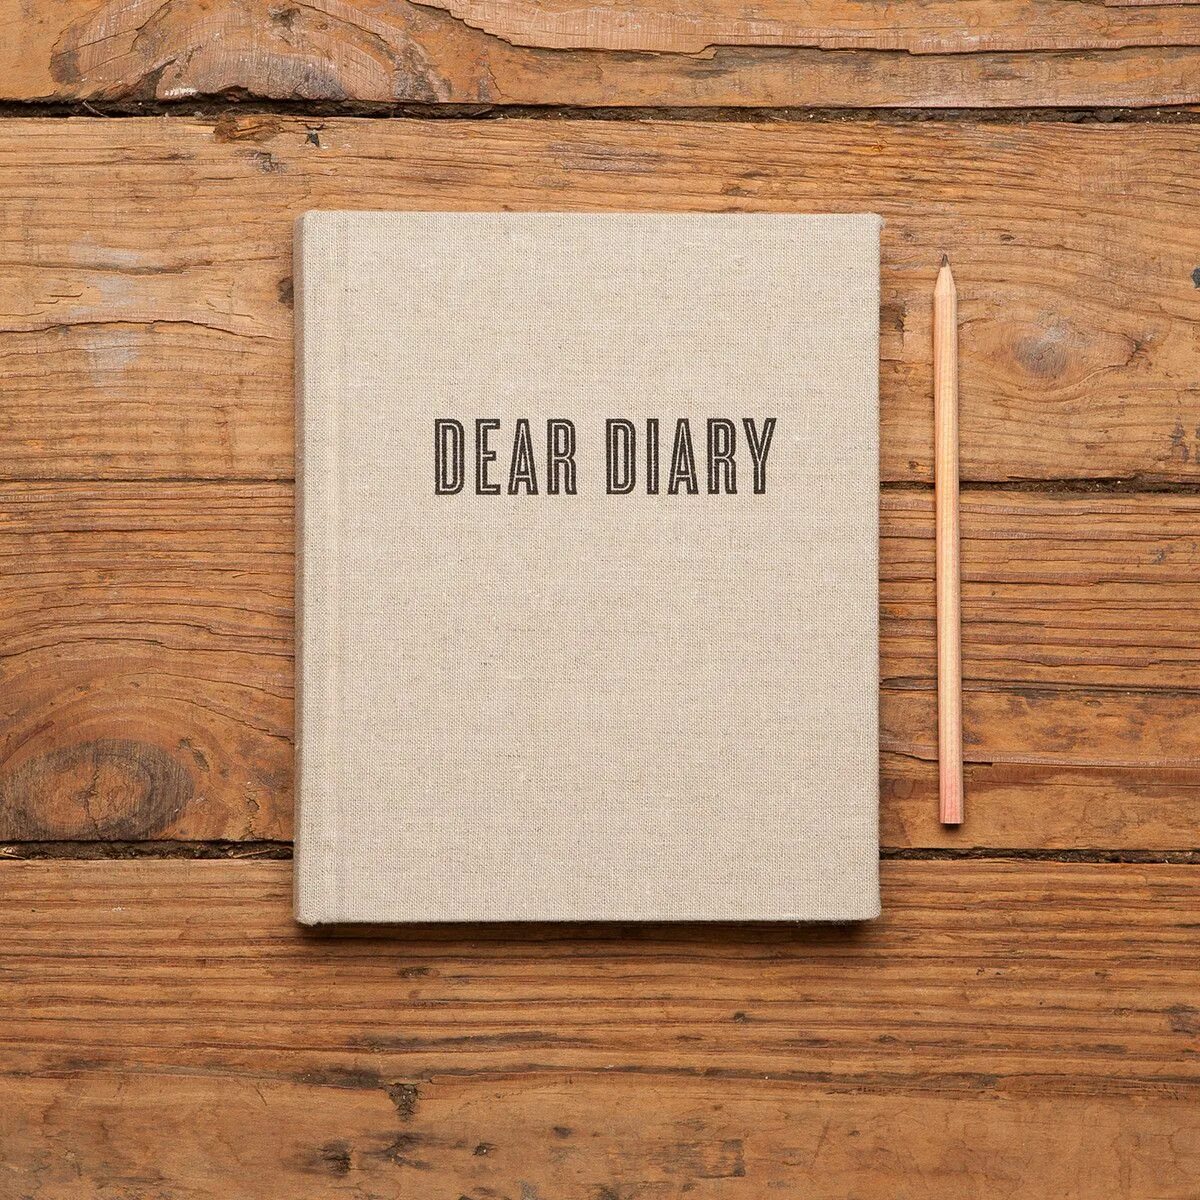 Dear Diary. Dear Diary ежедневник. Dairy дневник. Дорогой дневник надпись.